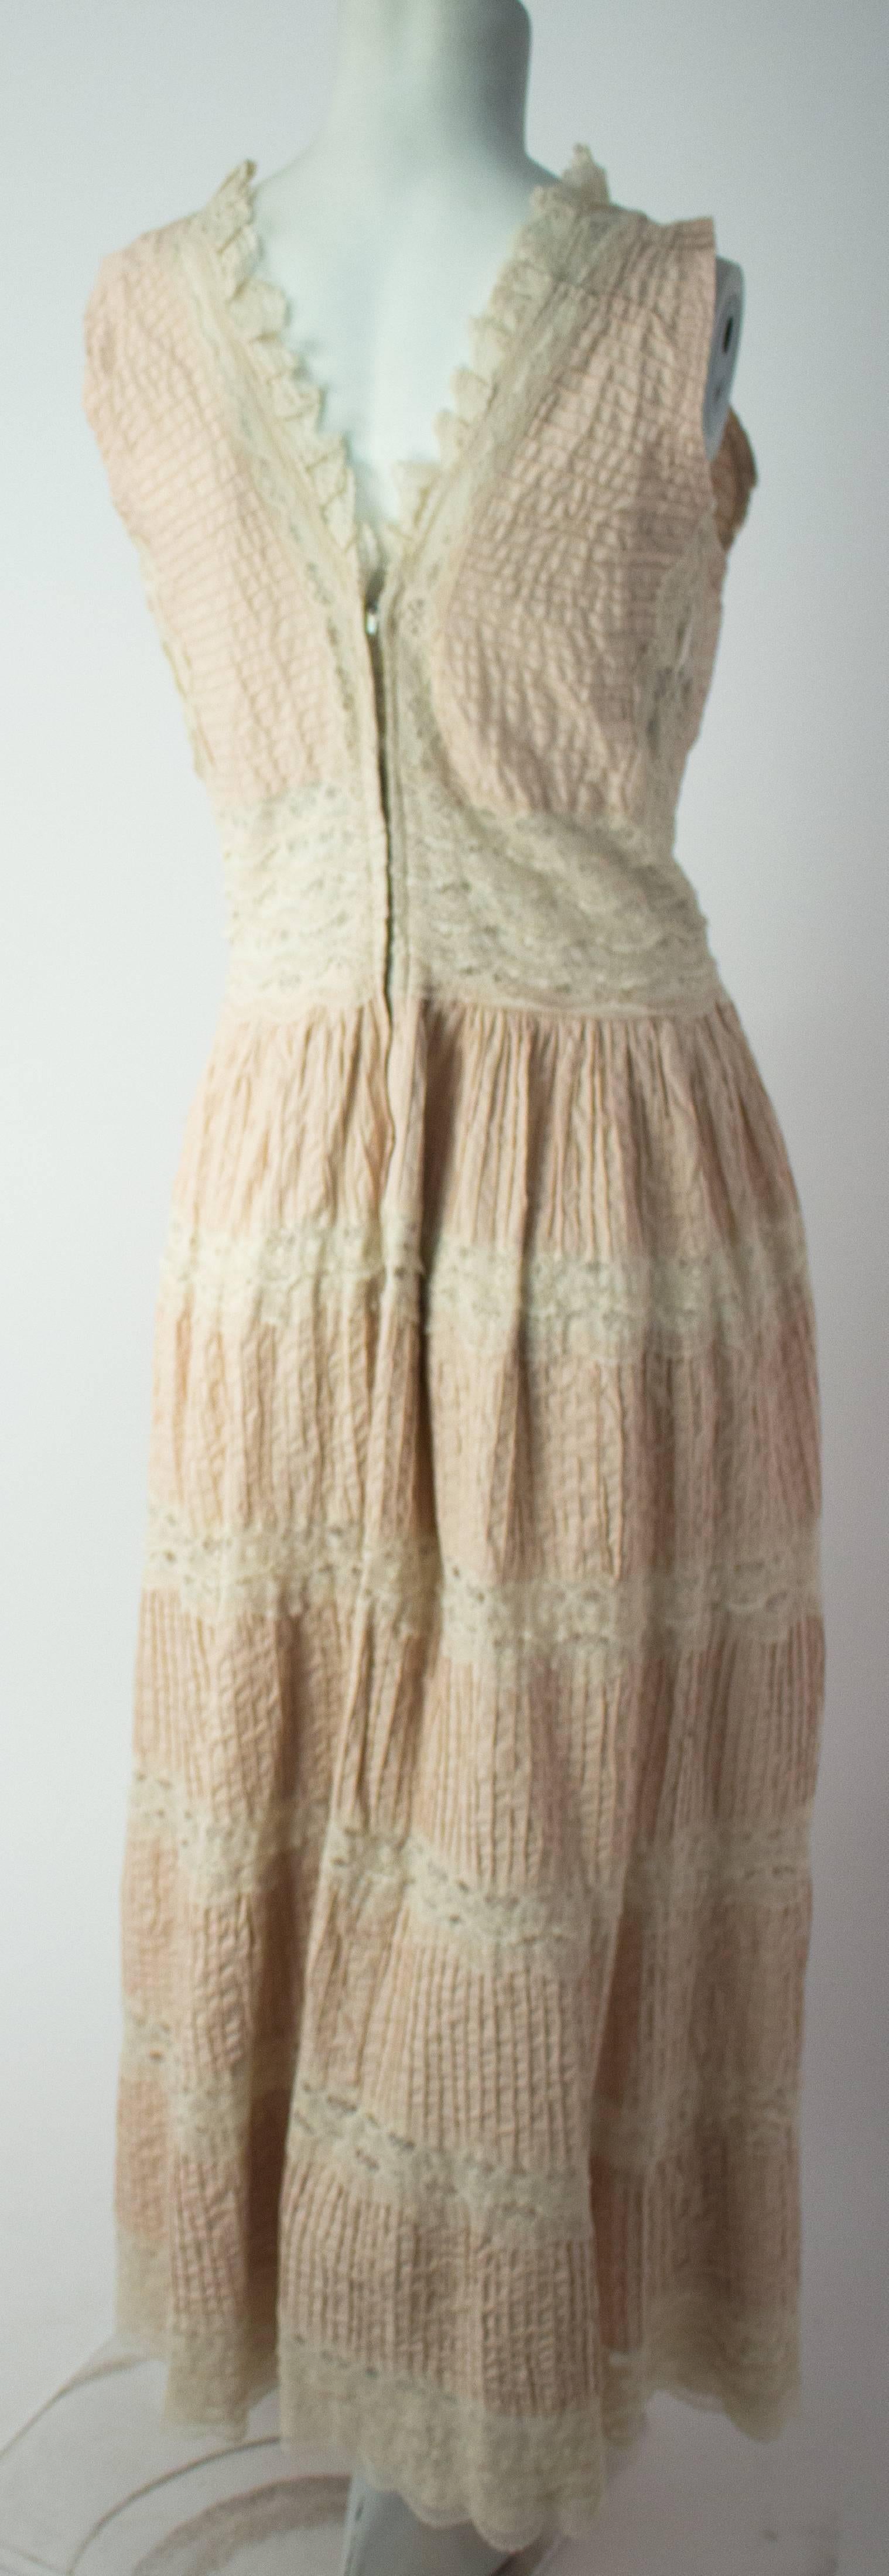 70s Lace Boho Dress. Unlined, sheer lace panels. Back zip closure.